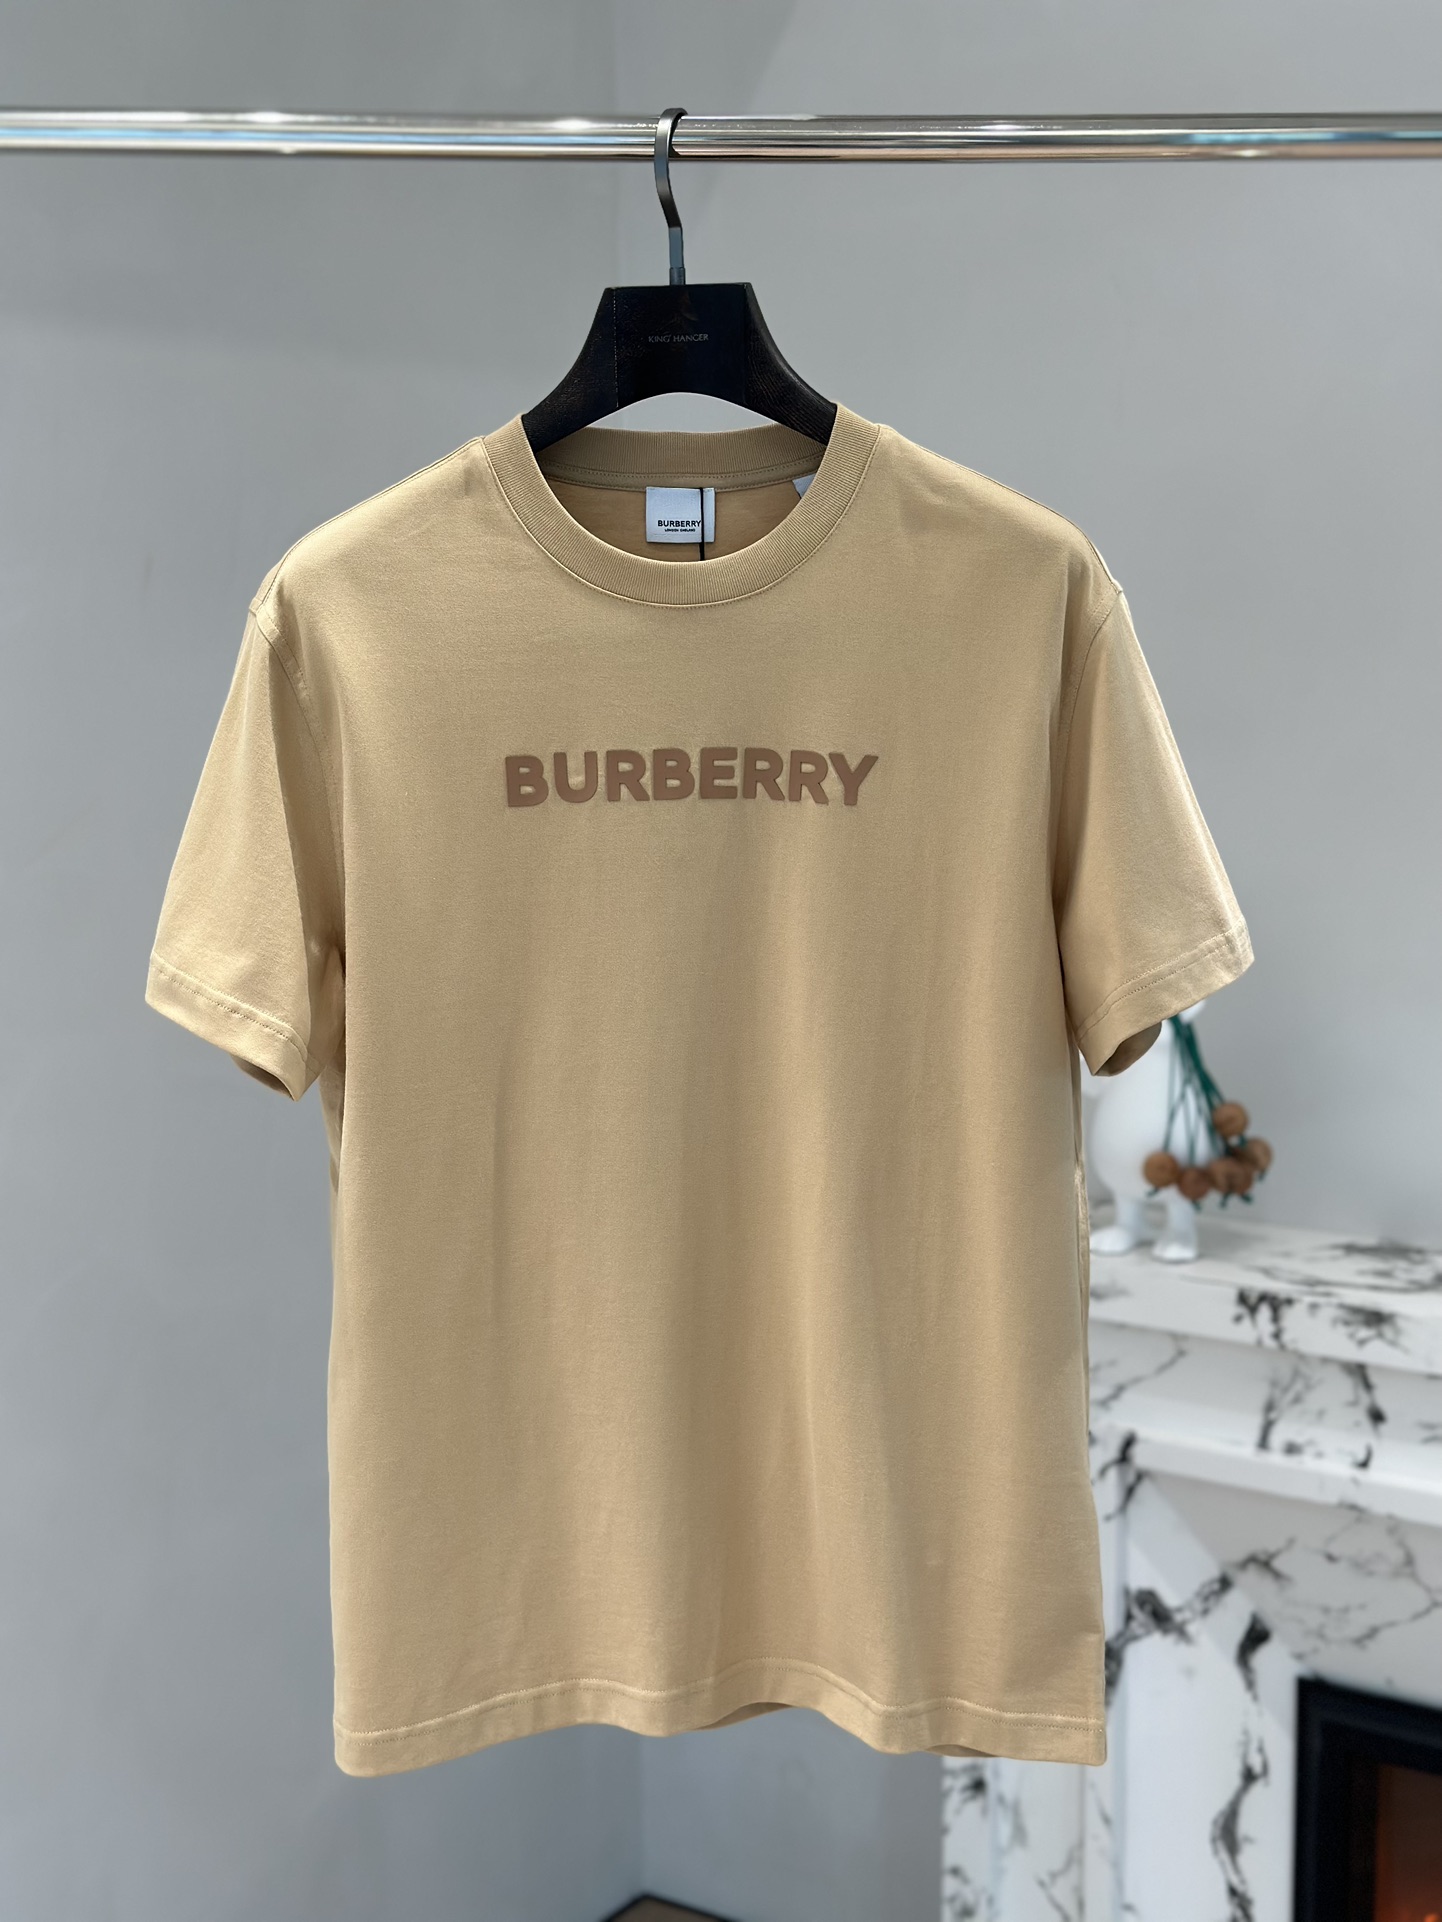 Burberry Clothing T-Shirt Printing Cotton Silica Gel